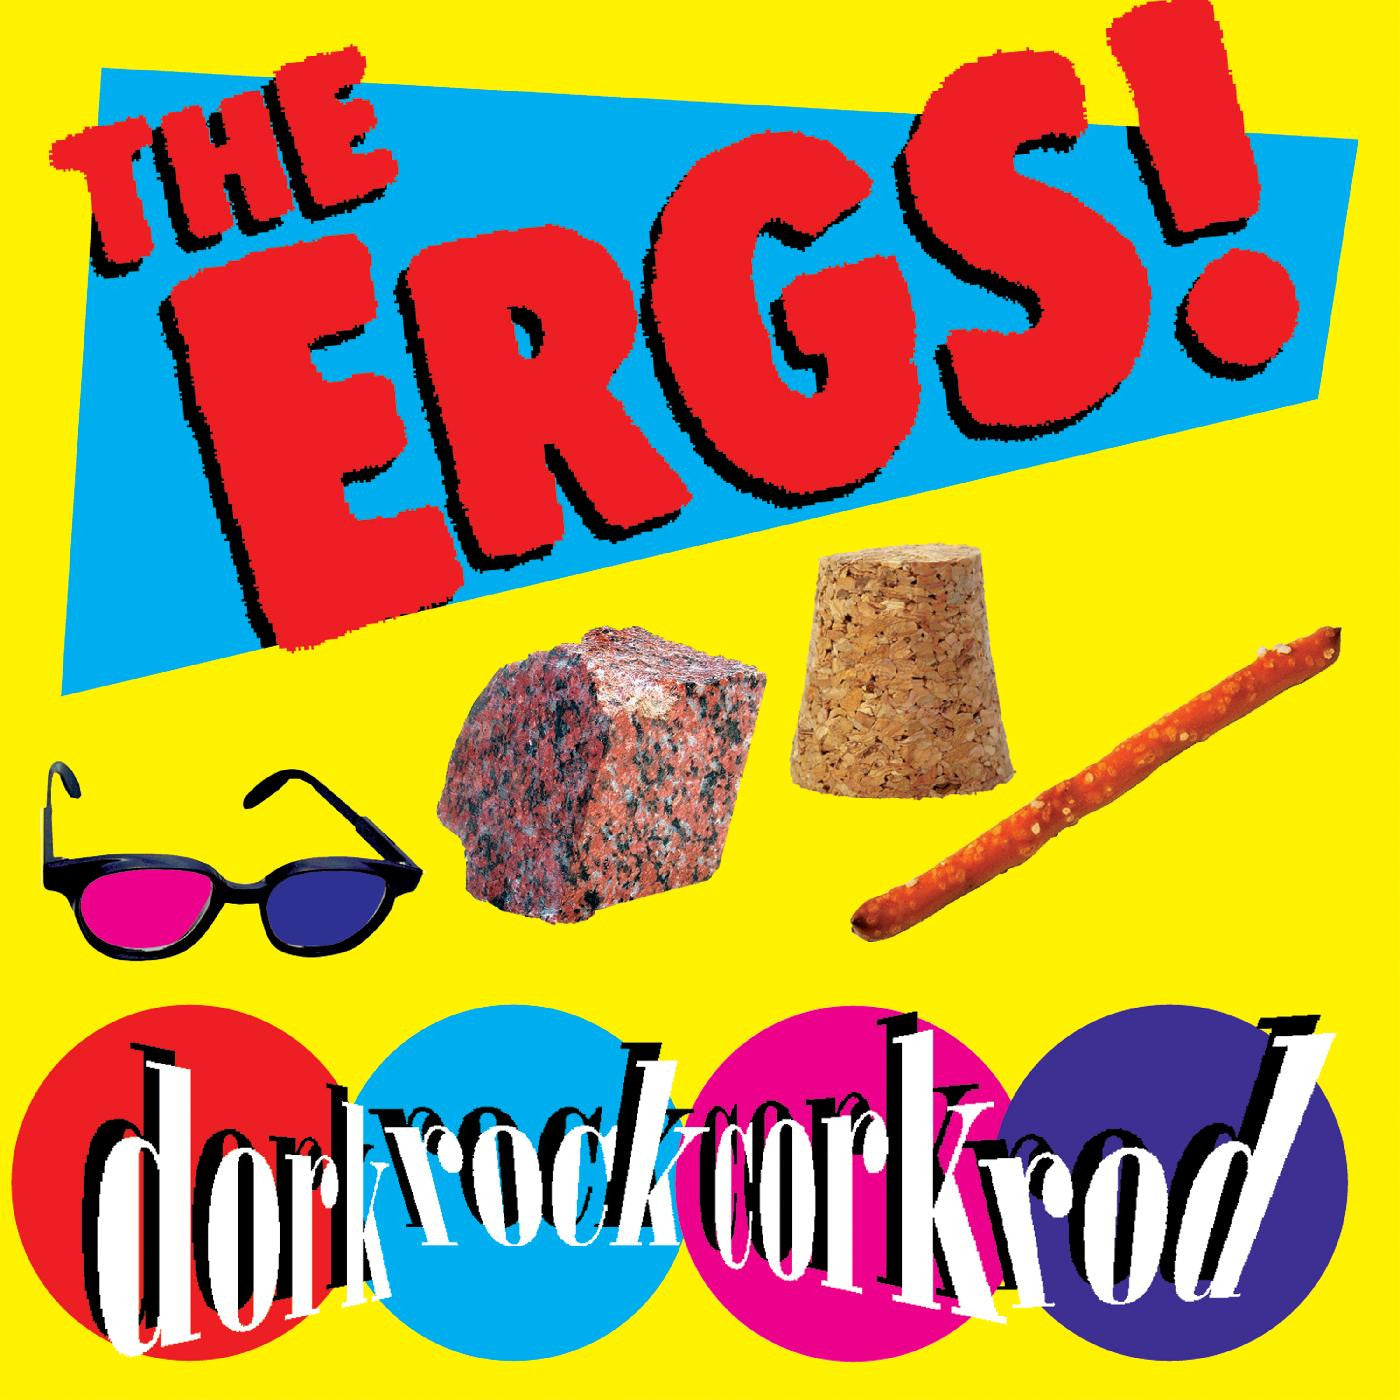 PRE-ORDER: The Ergs! "dorkrockcorkrod (Deluxe Edition)" 2xLP (Blue & Yellow)